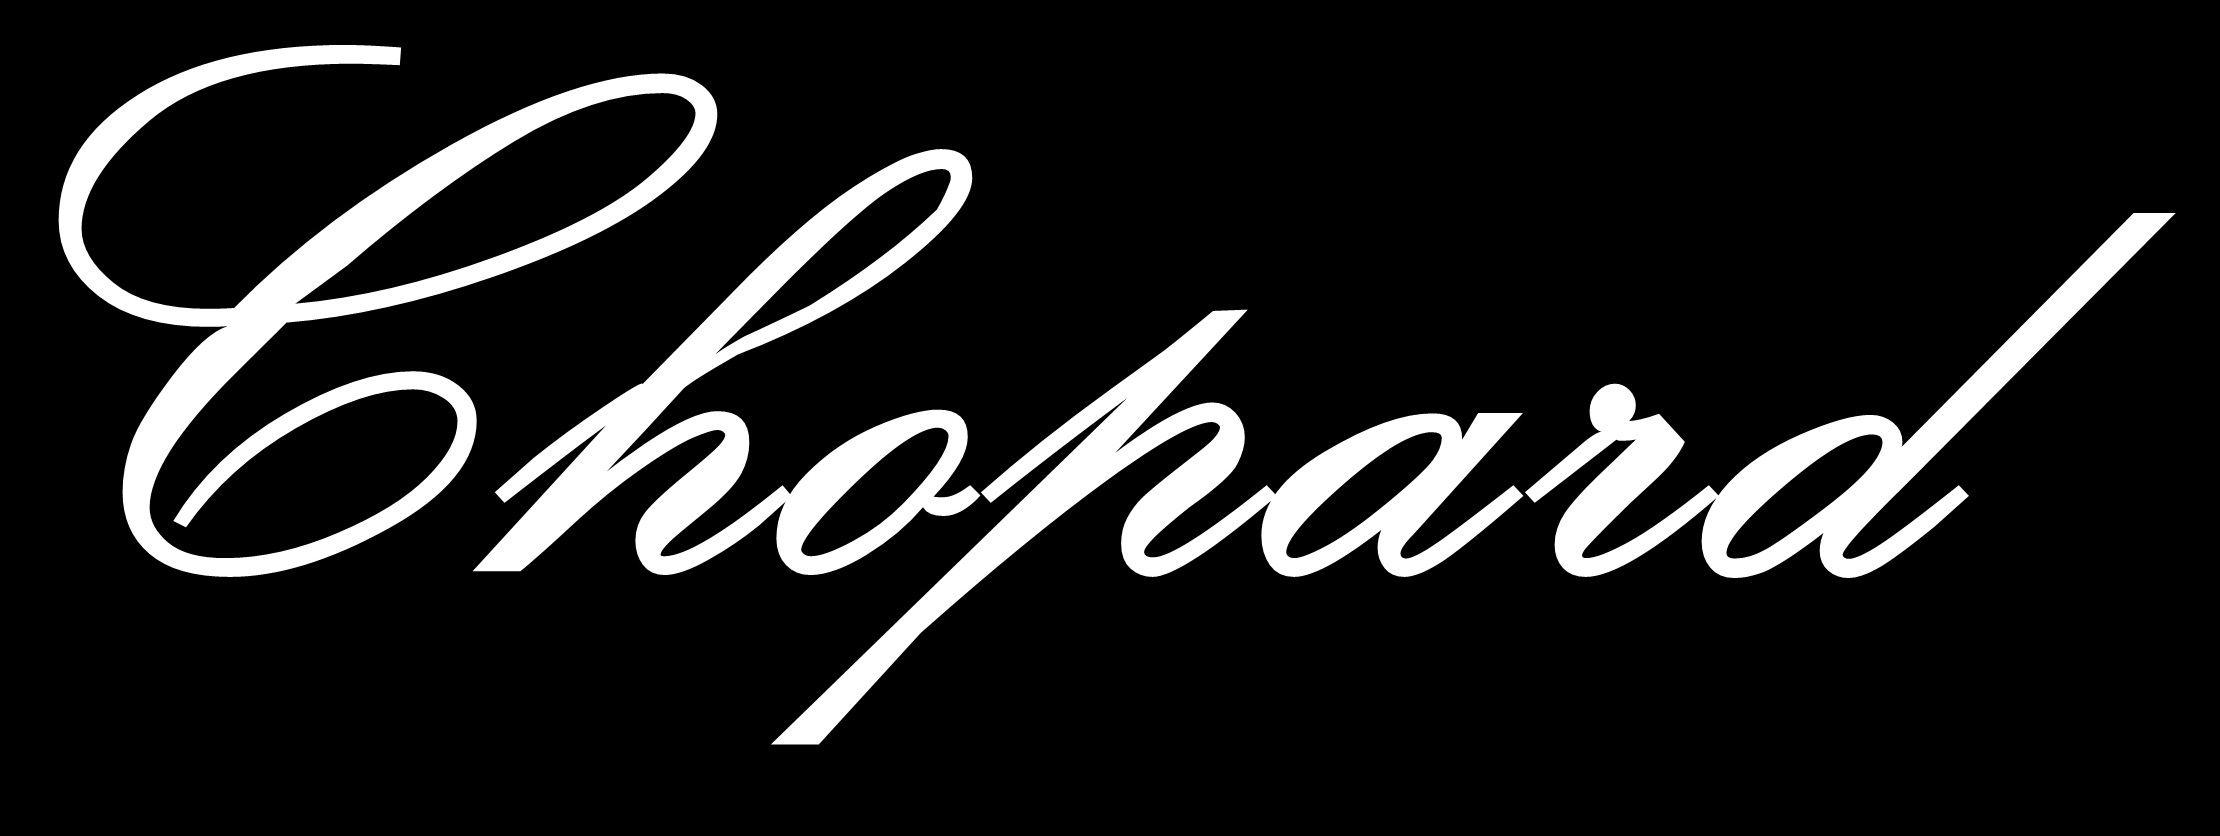 Chopard Logo - Image - Chopard-logo-wallpaper.jpg | Logopedia | FANDOM powered by Wikia